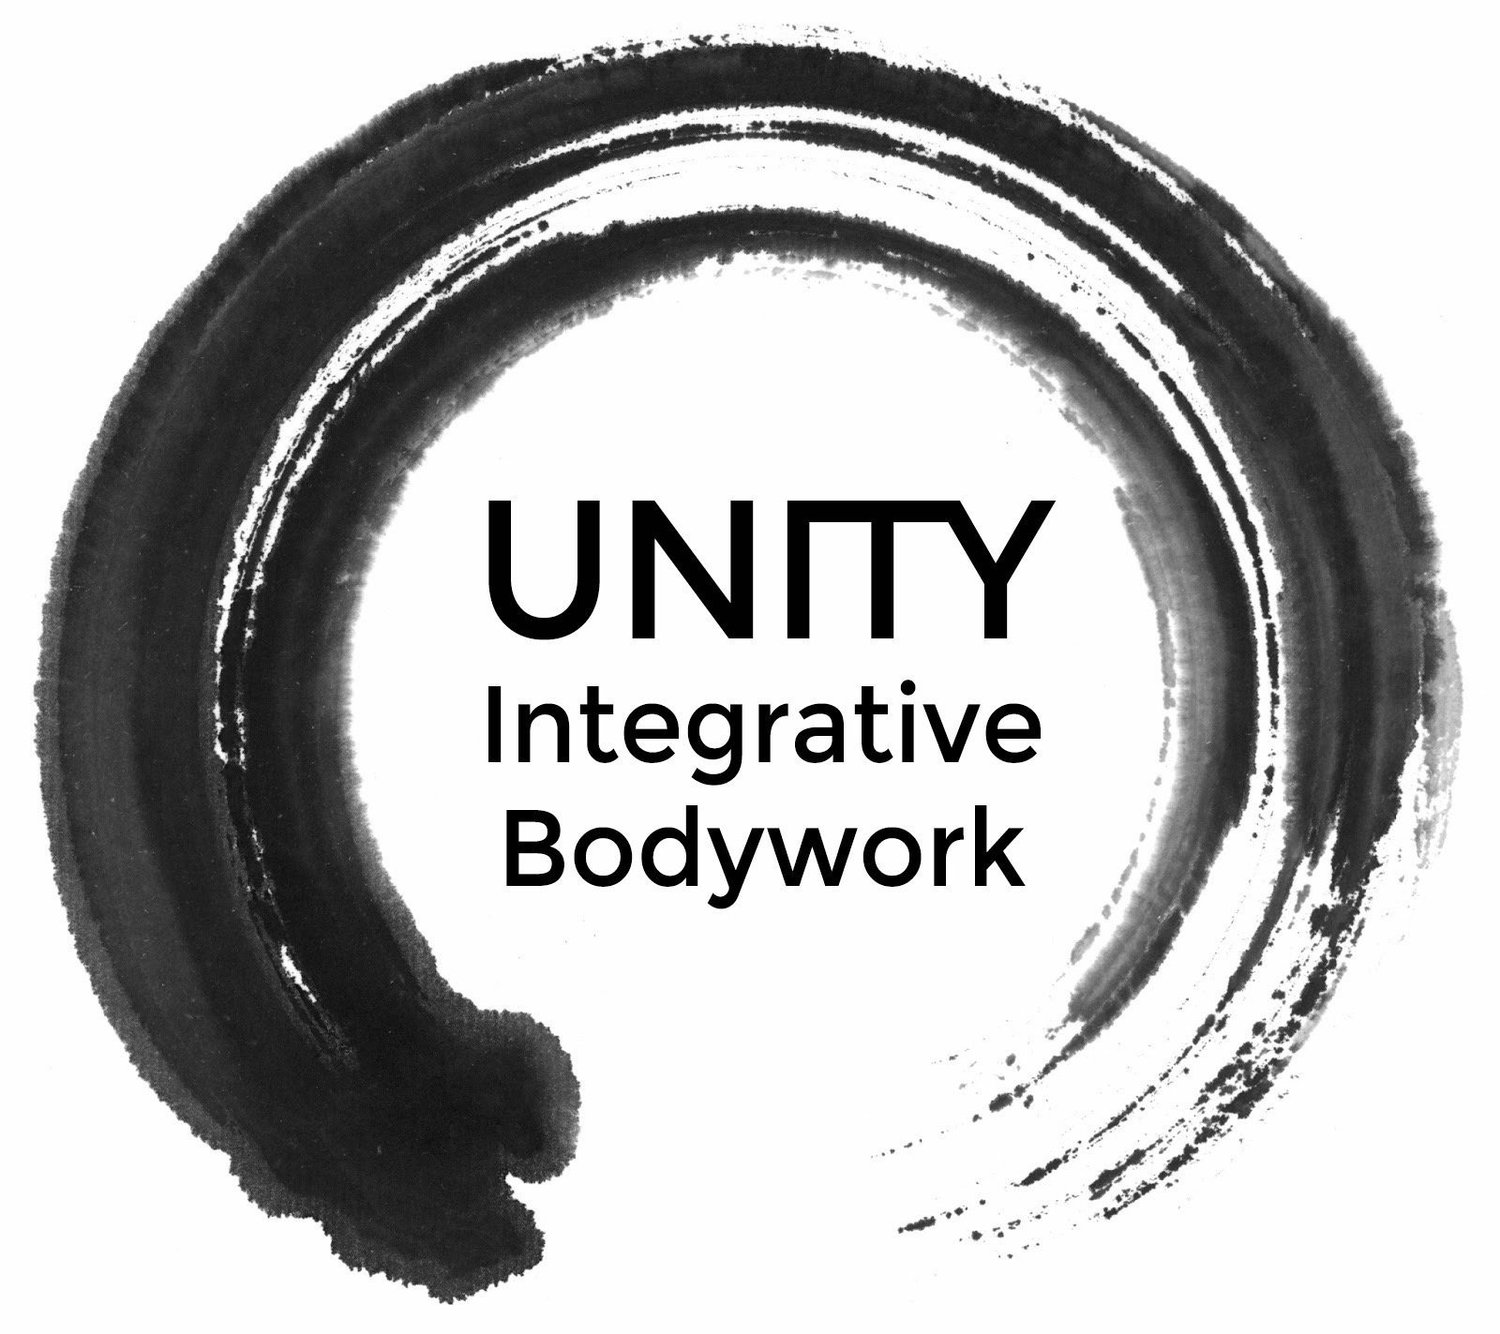 UNITY Integrative Bodywork